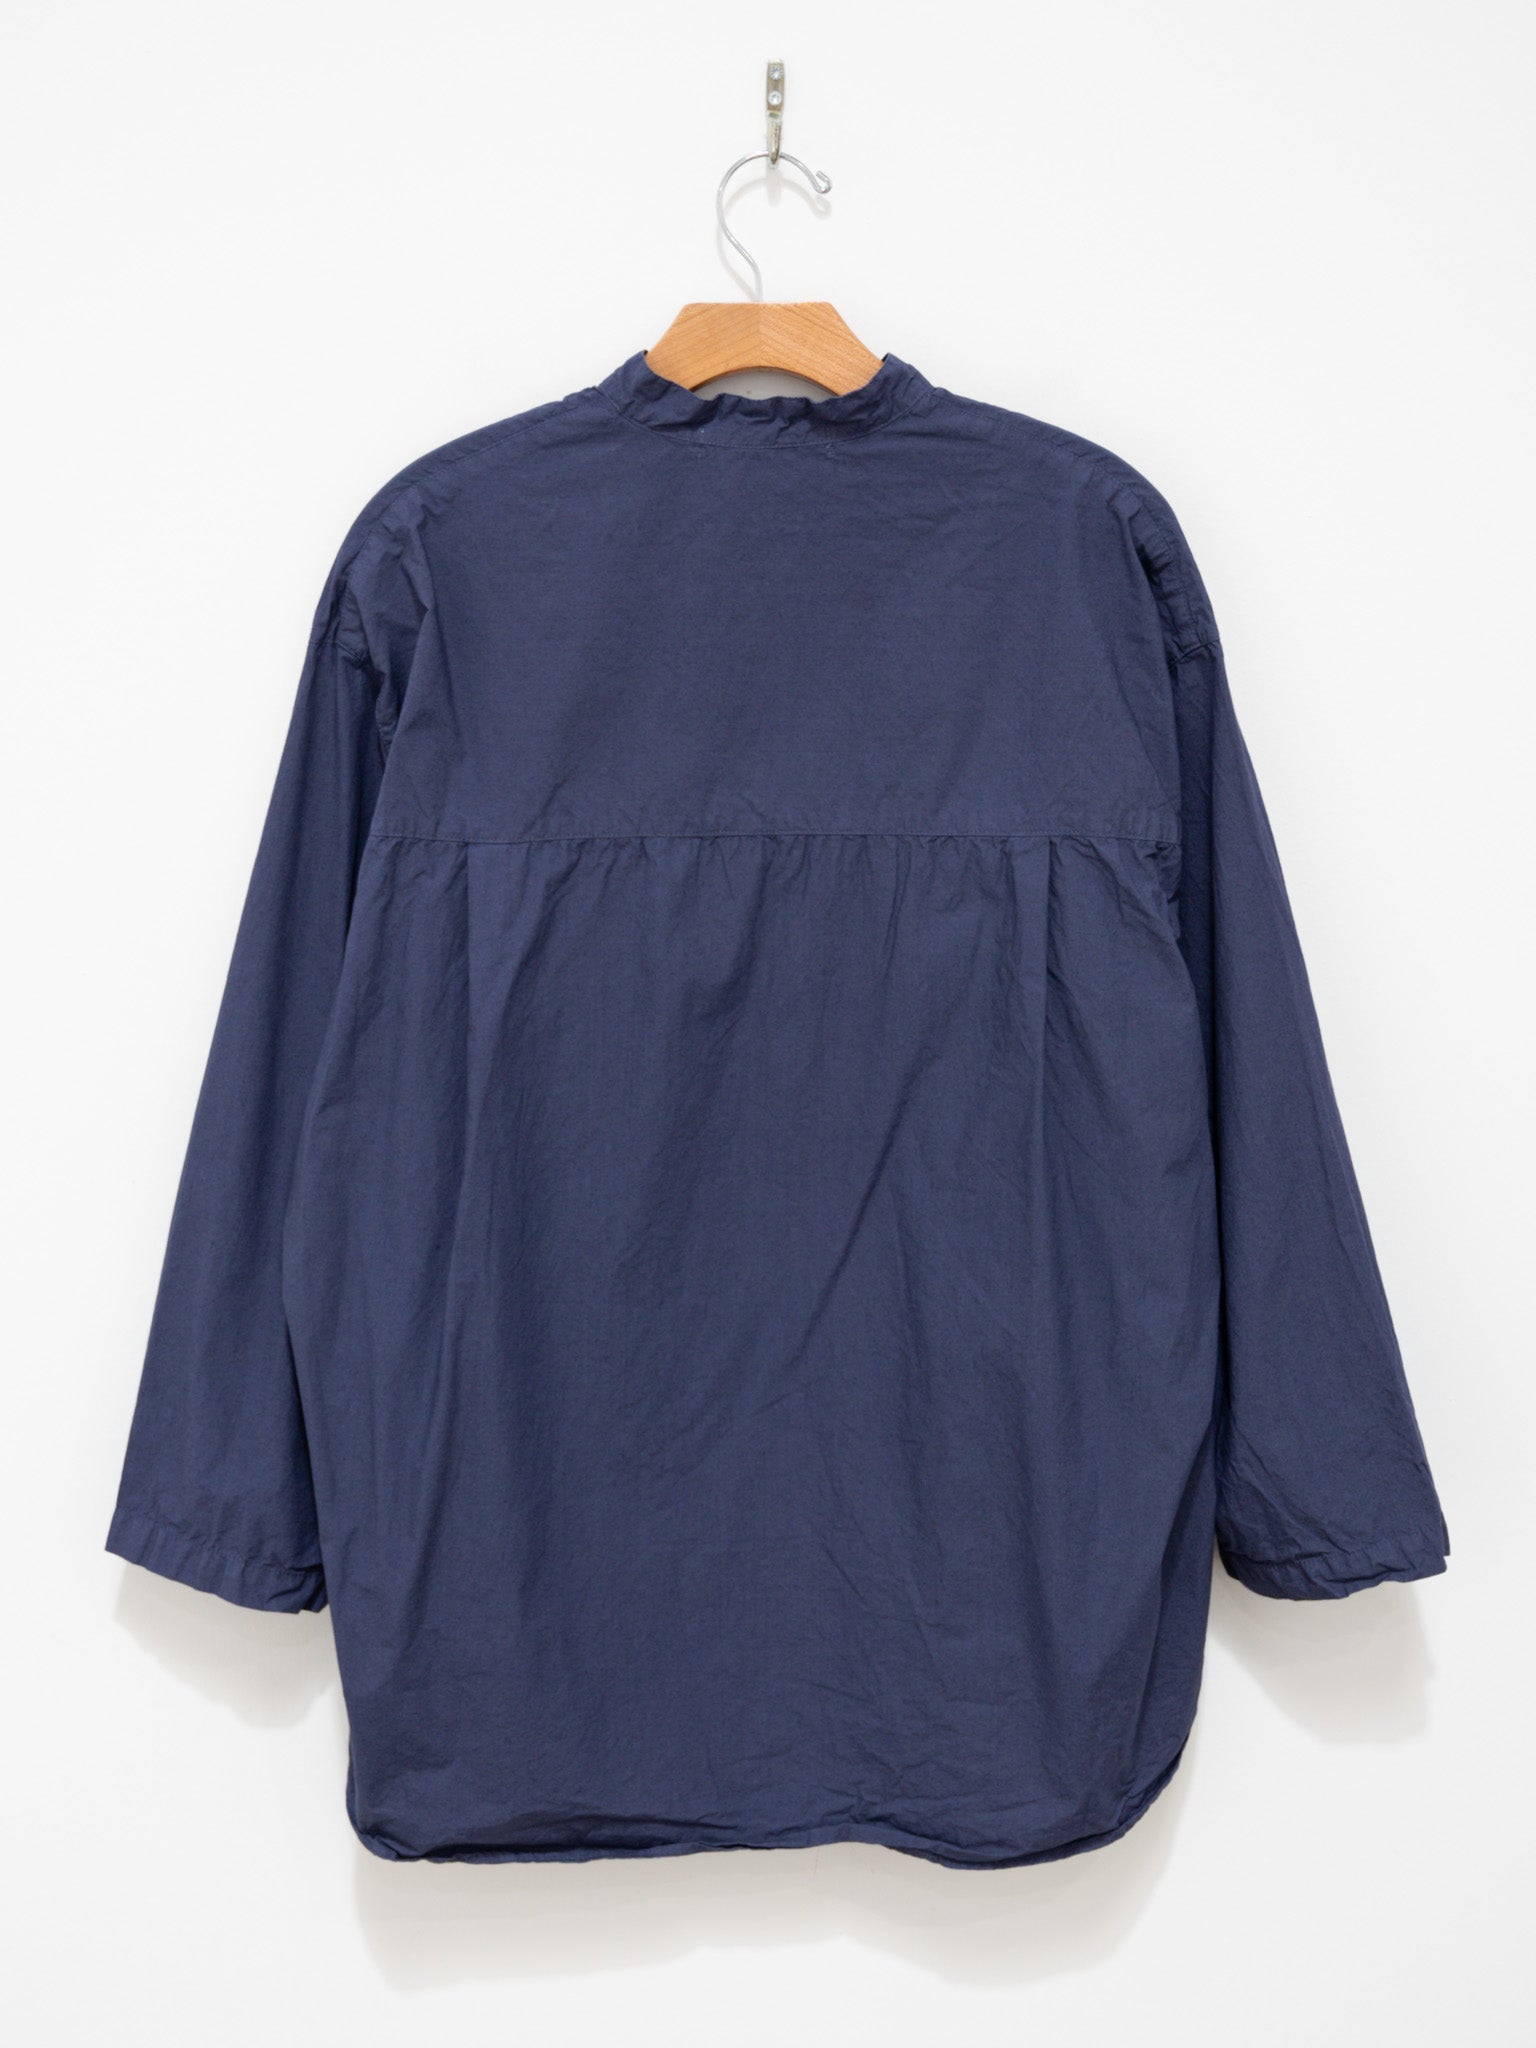 Namu Shop - Veritecoeur Stand Collar Shirt - Navy